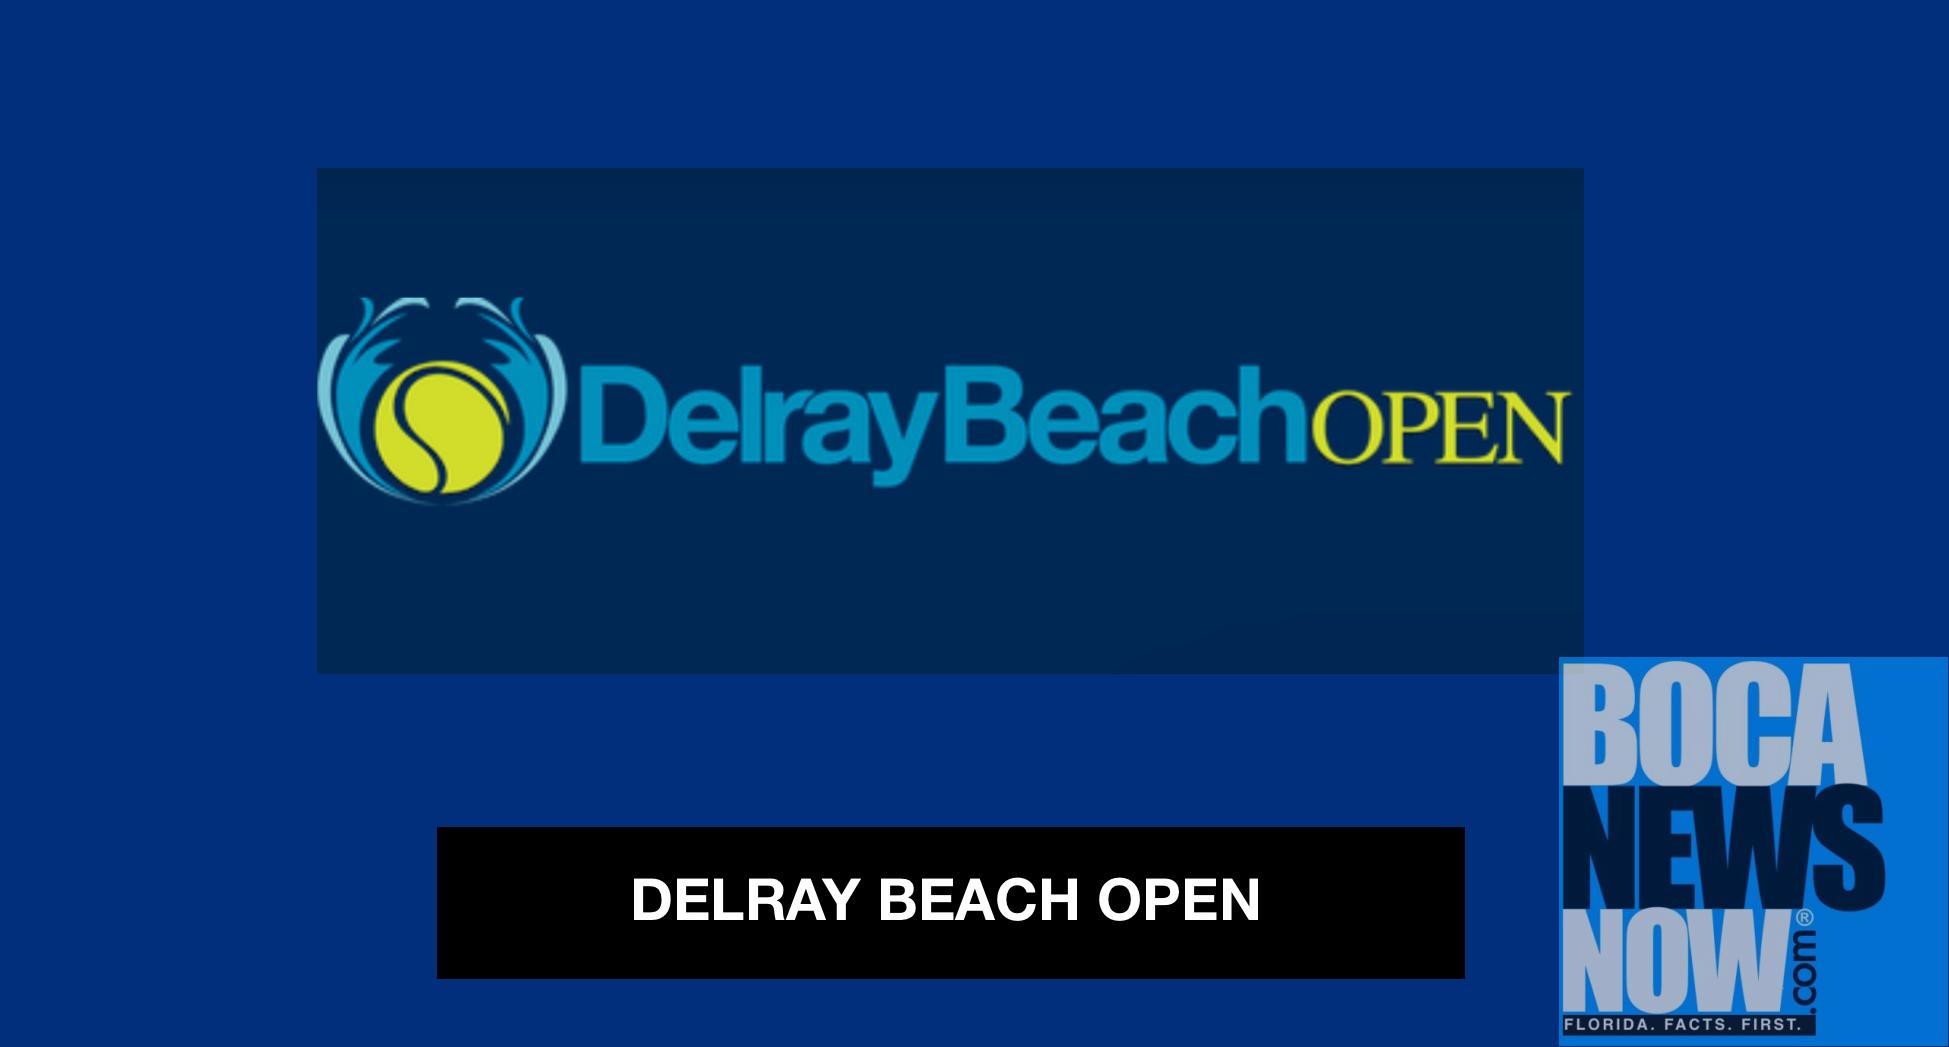 Delray Beach Open Announces Events, Schedules